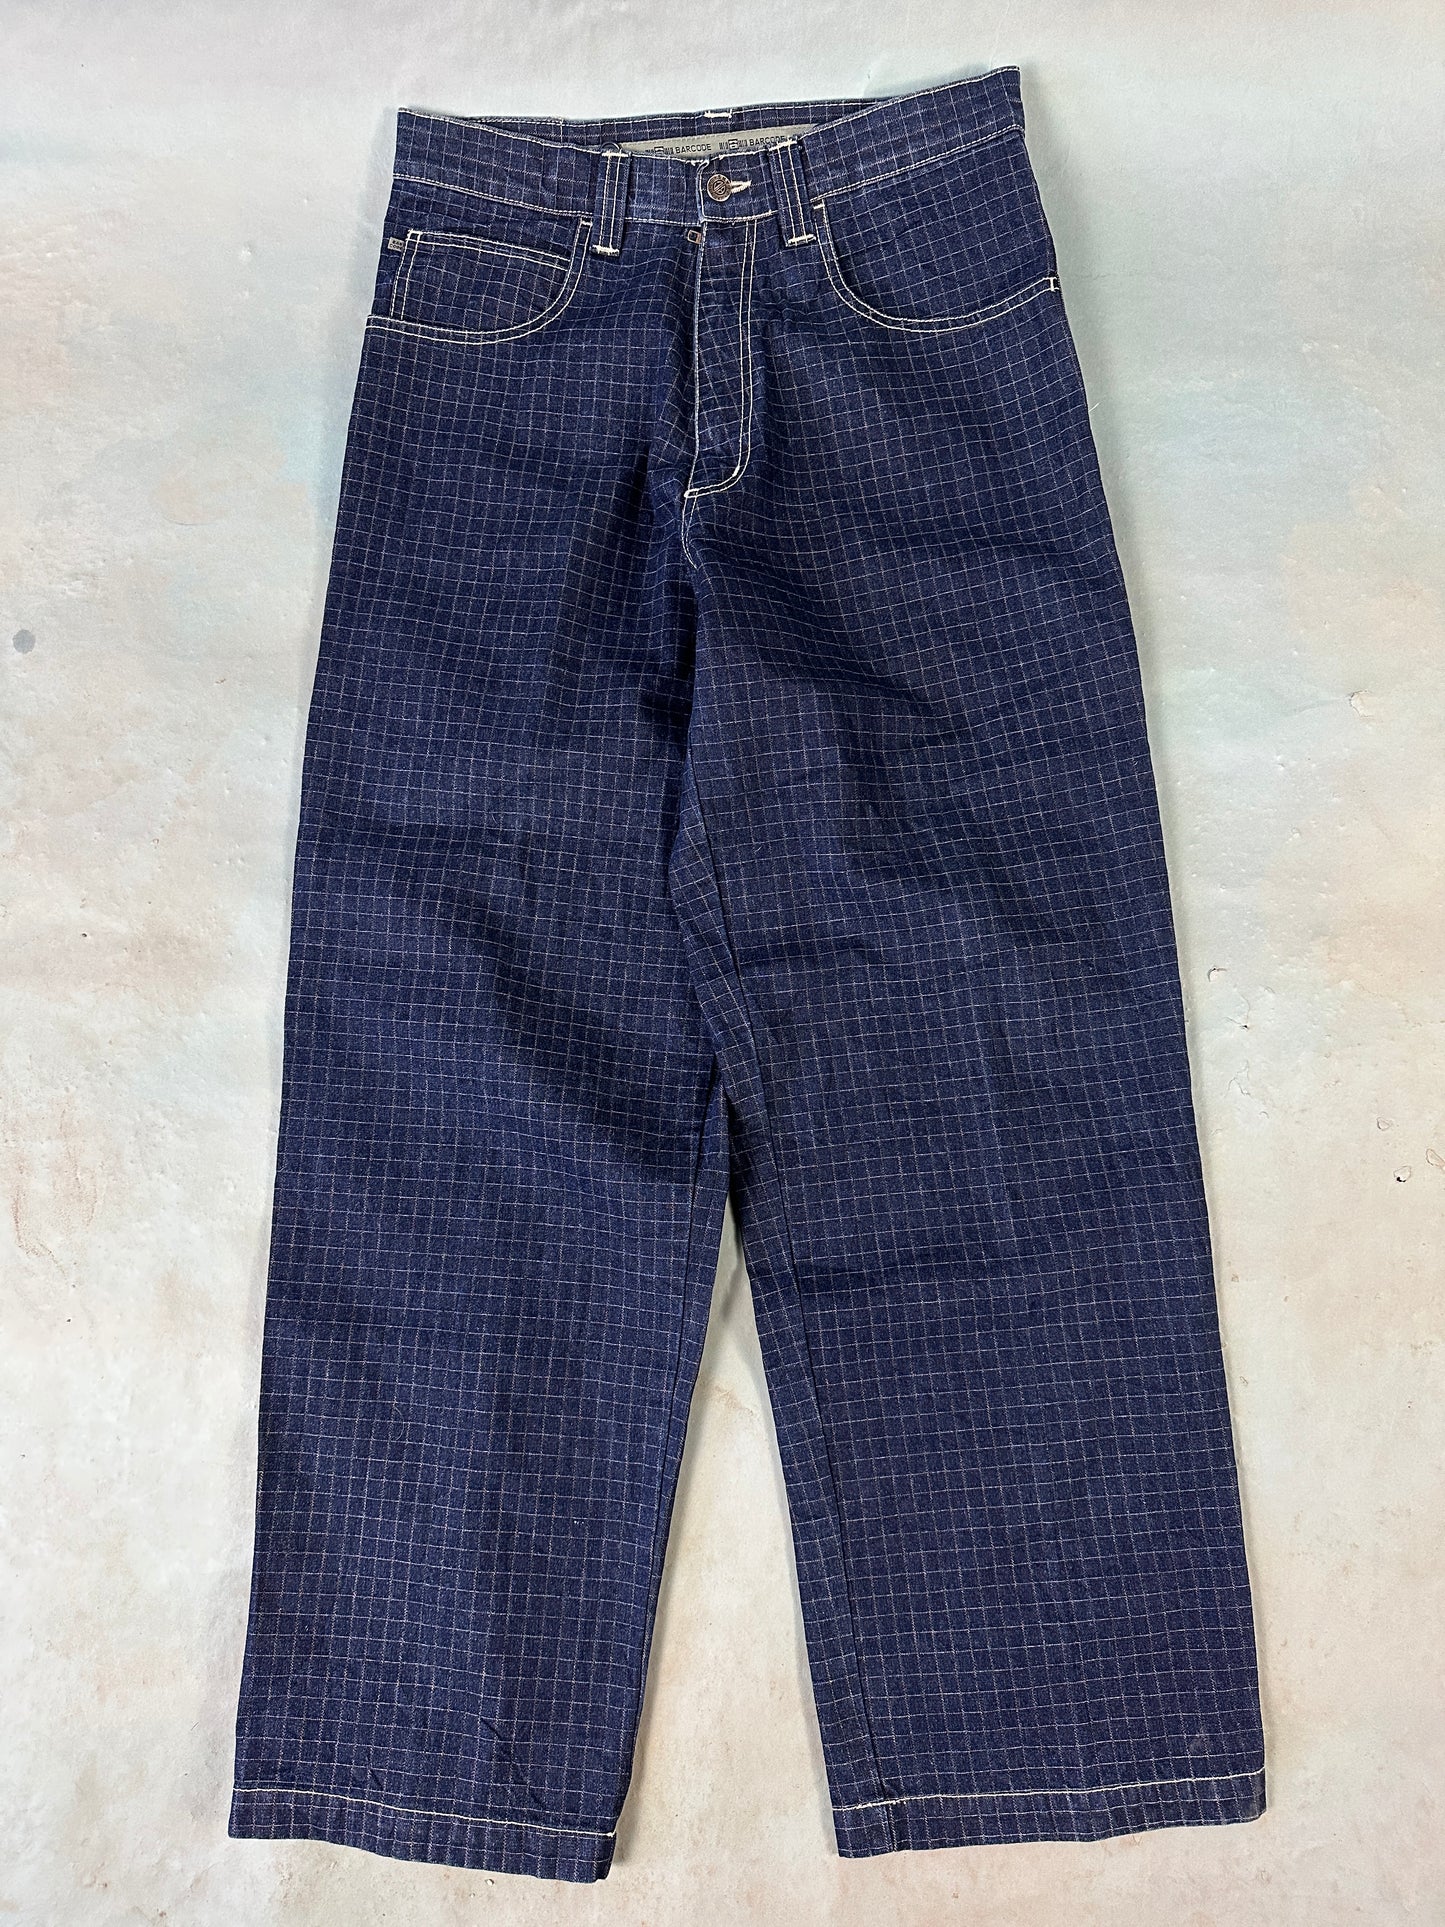 Barcode Carpenter Vintage Jeans - 34 x 32